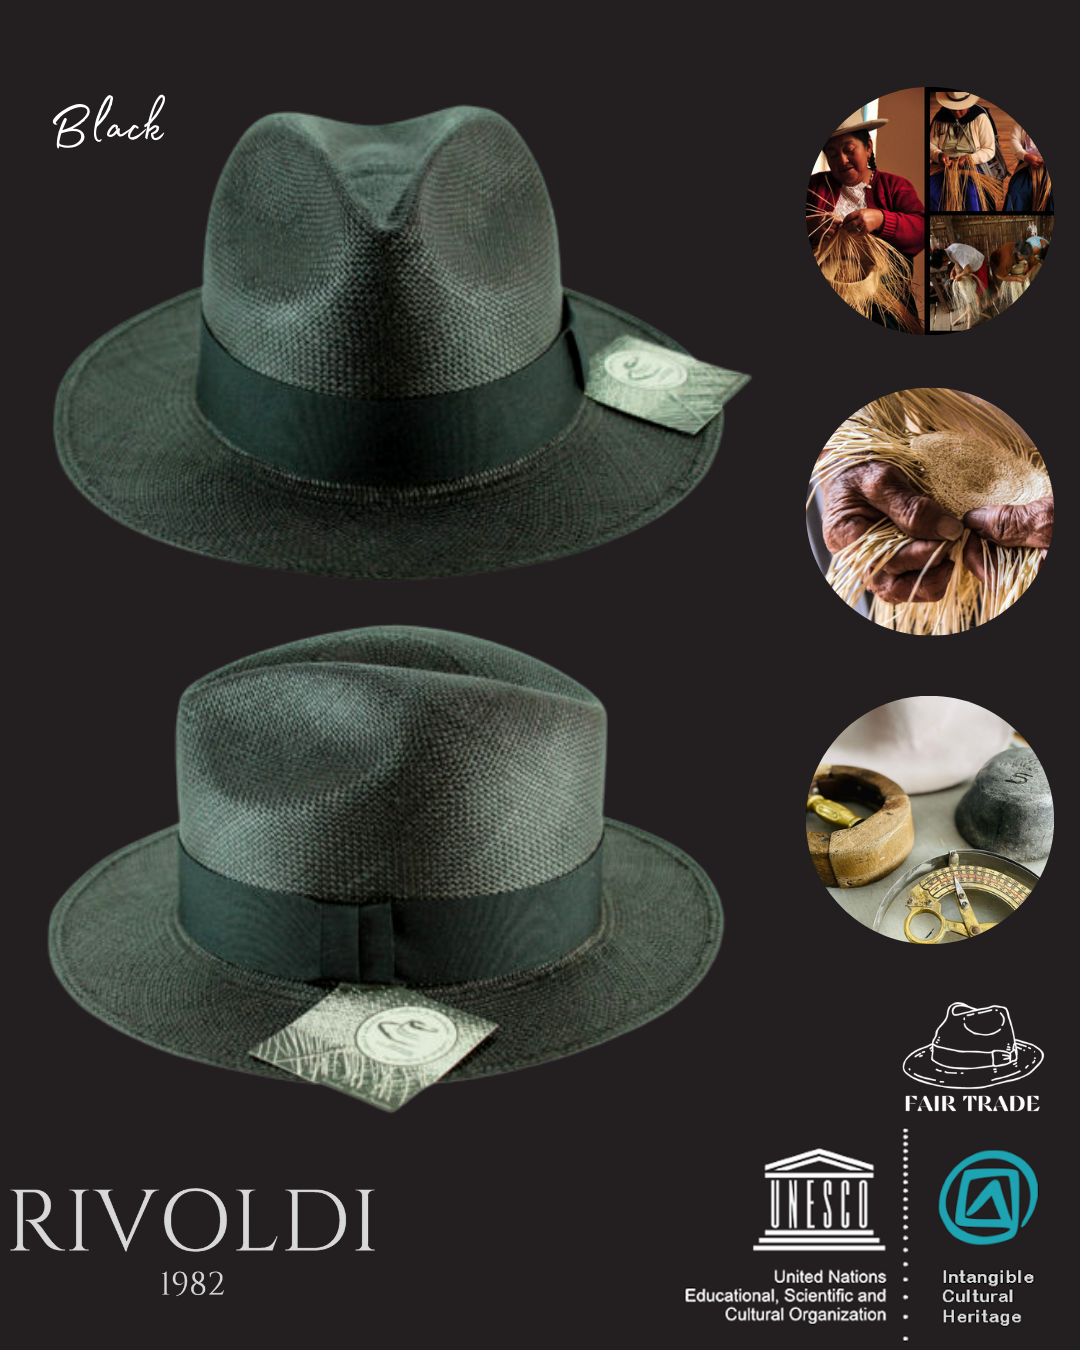 Rio - Straw Packable Panama Hat | Artesano Brick / L: 58 cm